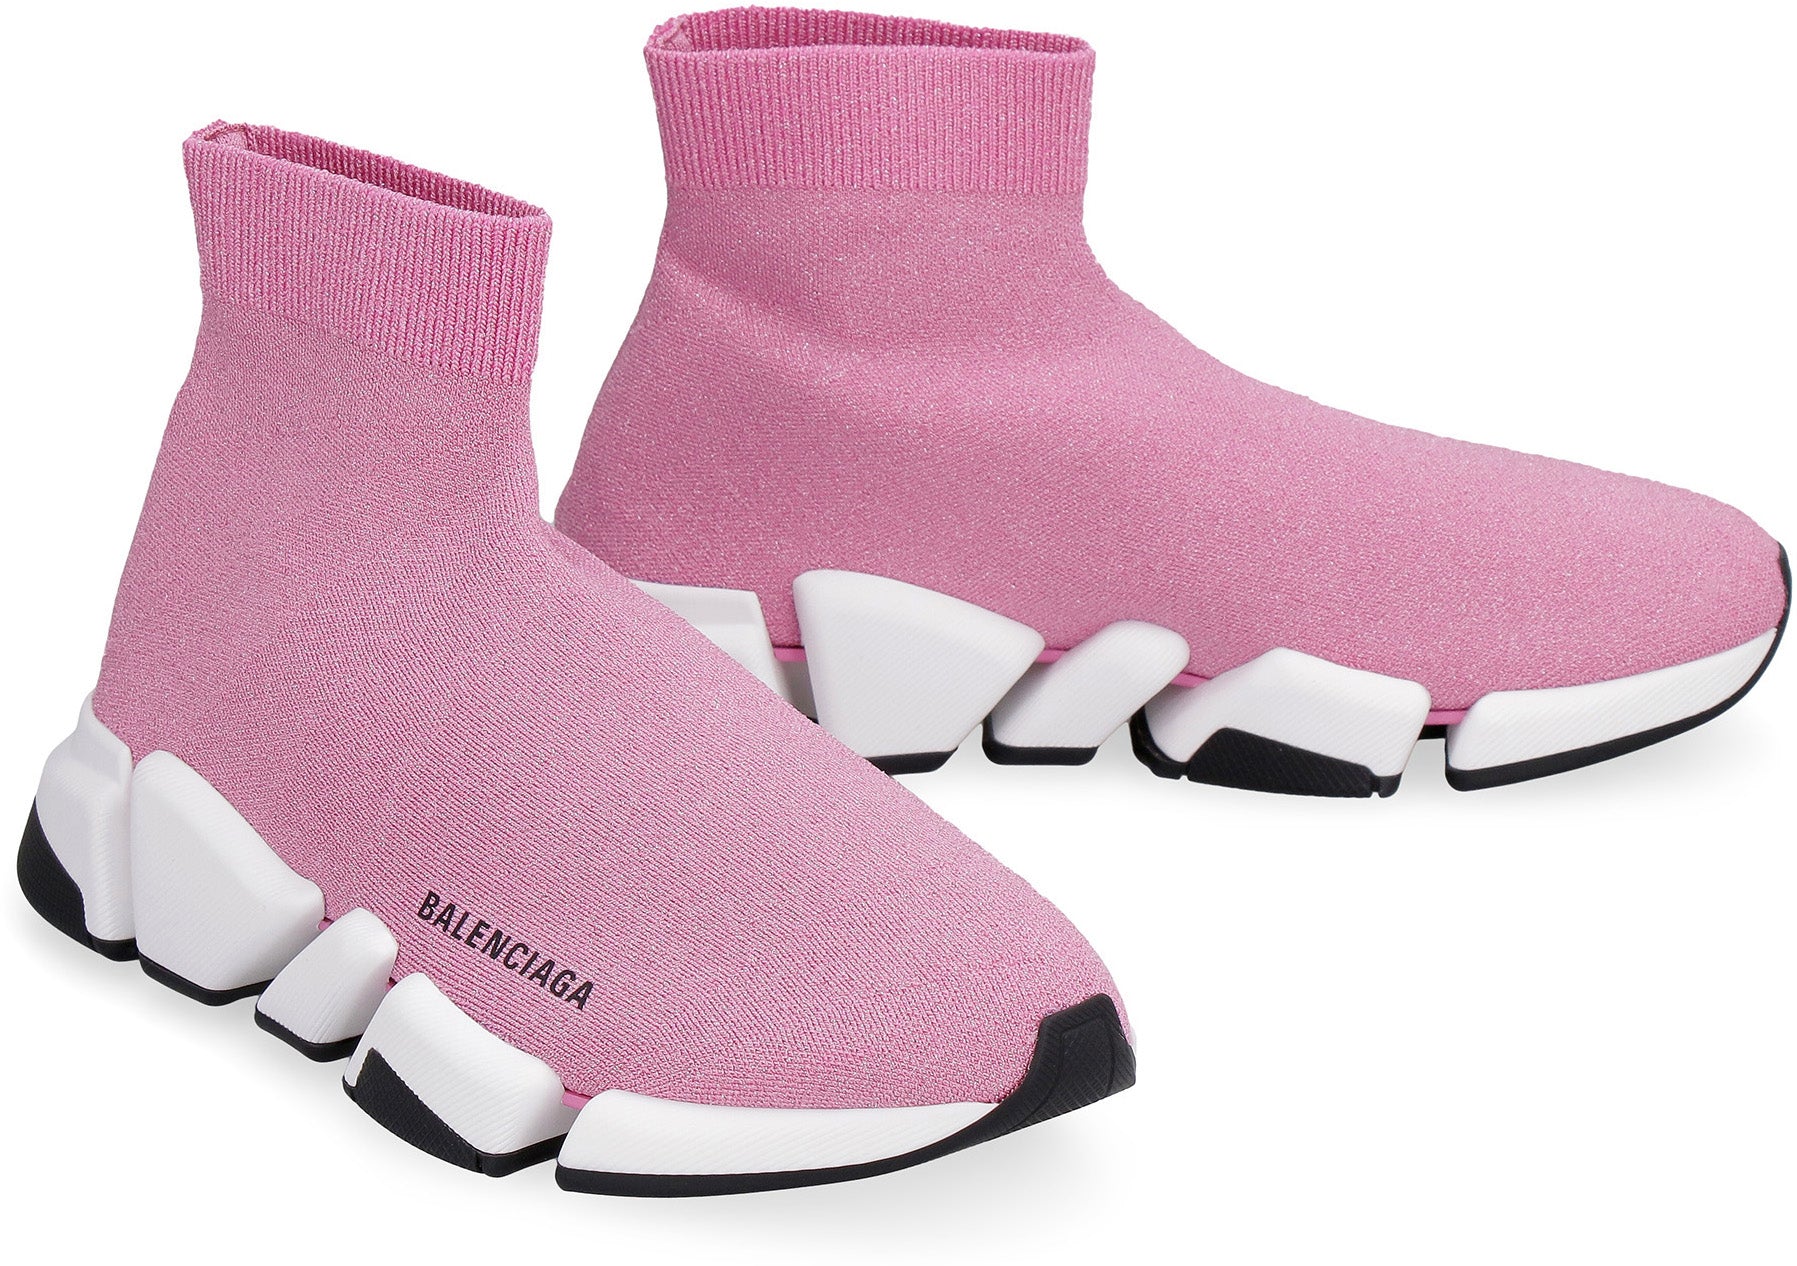 Kylie Jenner Hot Pink Balenciaga Sock Boots September 2018  SASSY DAILY  Fashion News